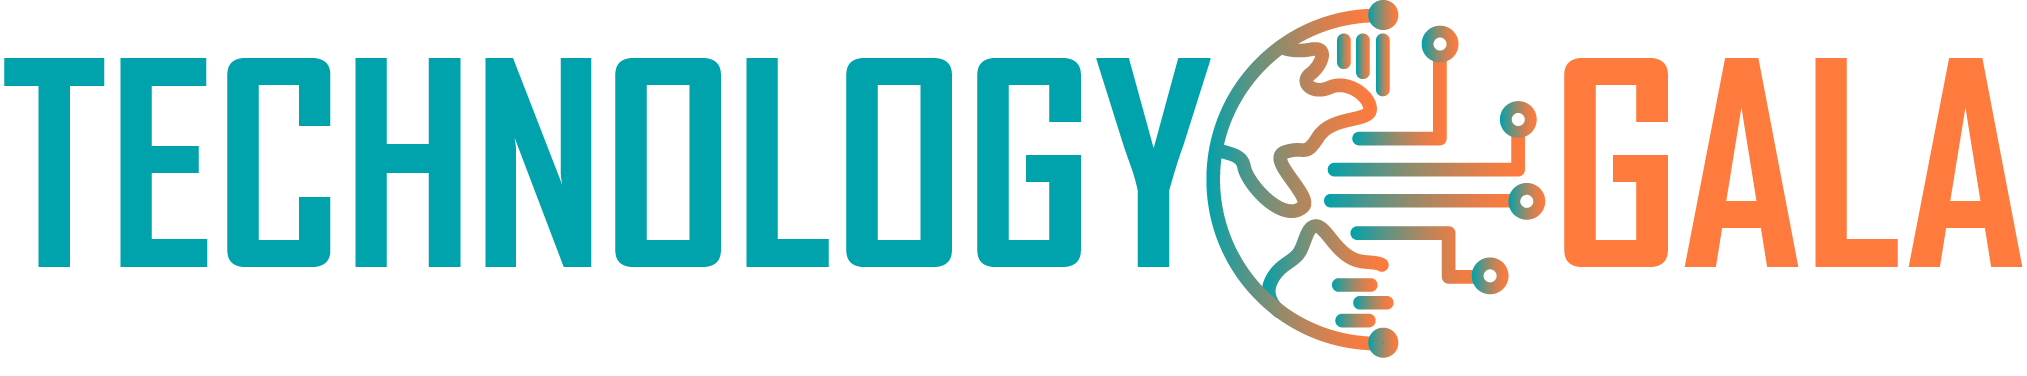 Technology Gala Logo